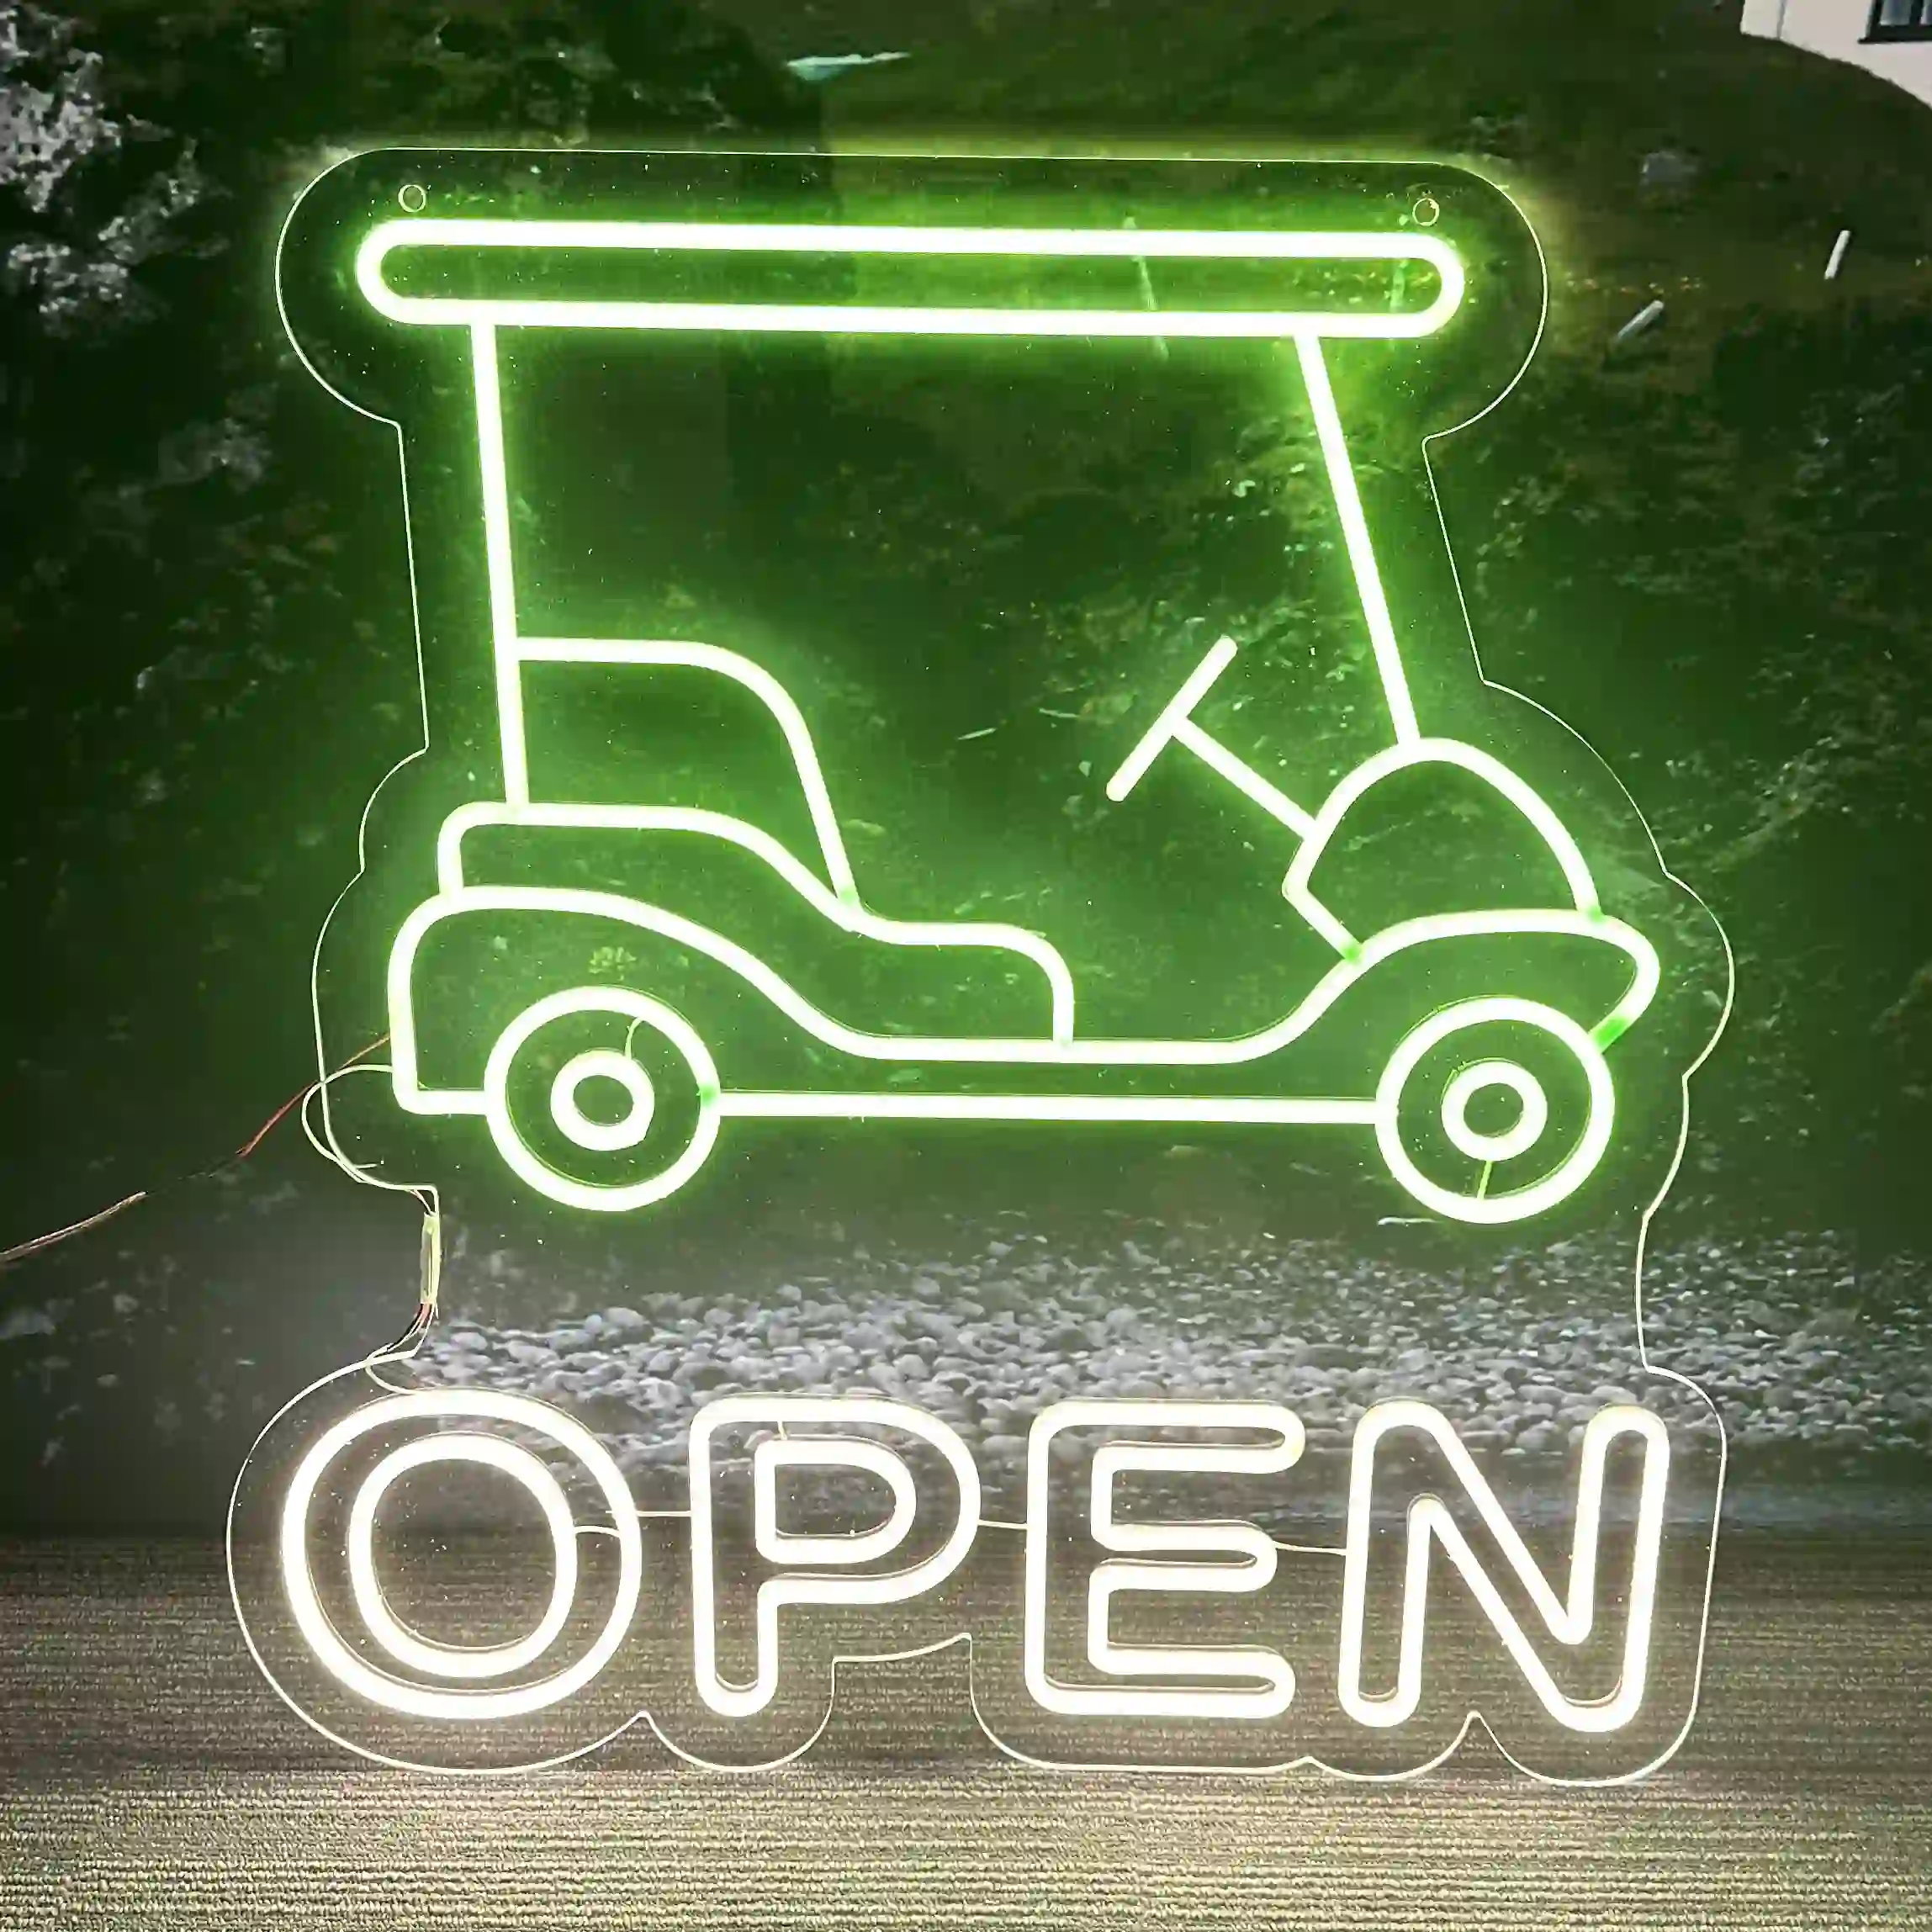 Golf cart led open sign